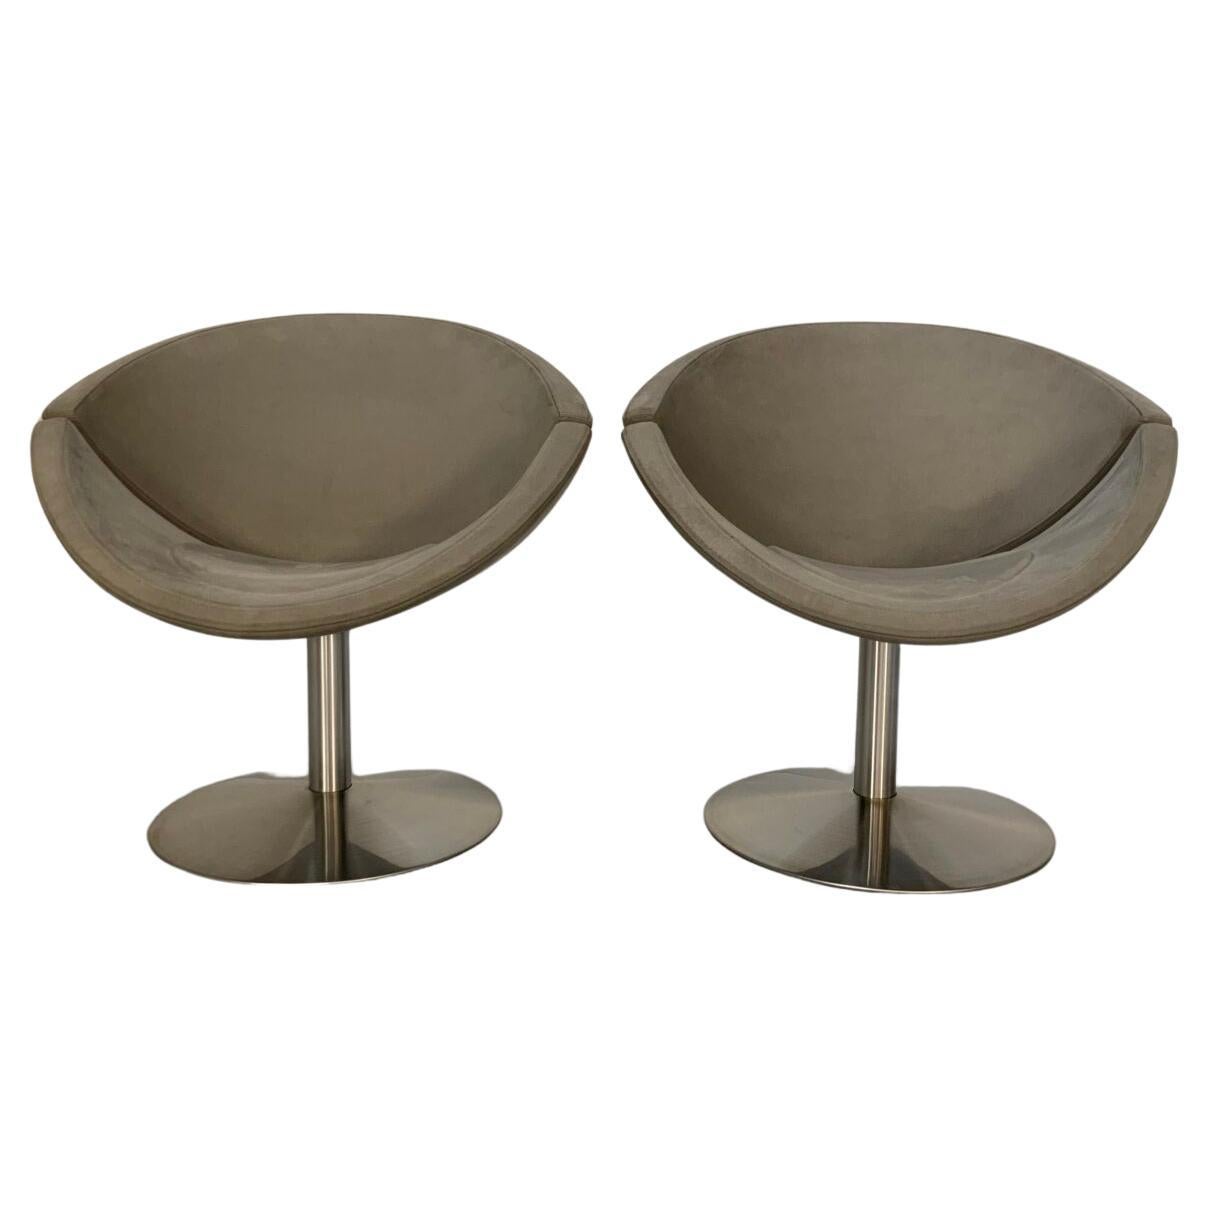 Pair of Erik Jorgensen "Apollo" EJ 96 Chairs - In Mid-Grey Alcantara For Sale